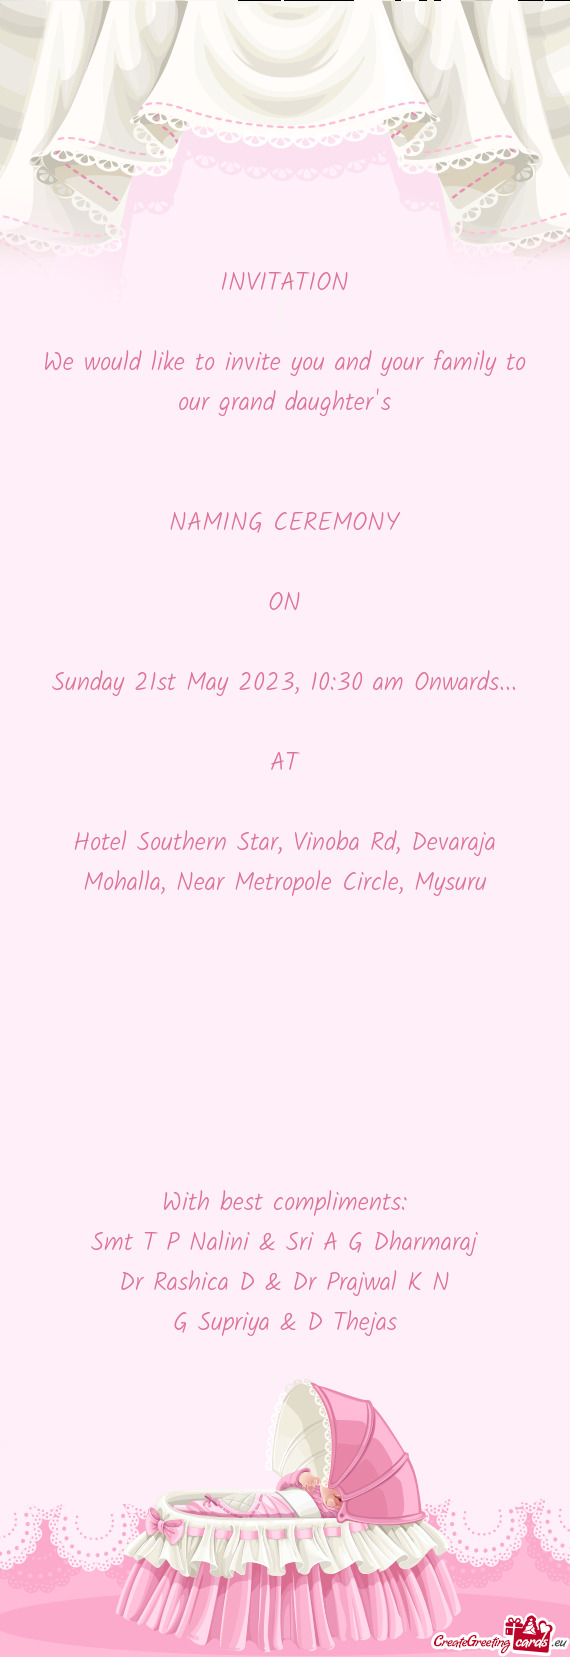 Hotel Southern Star, Vinoba Rd, Devaraja Mohalla, Near Metropole Circle, Mysuru